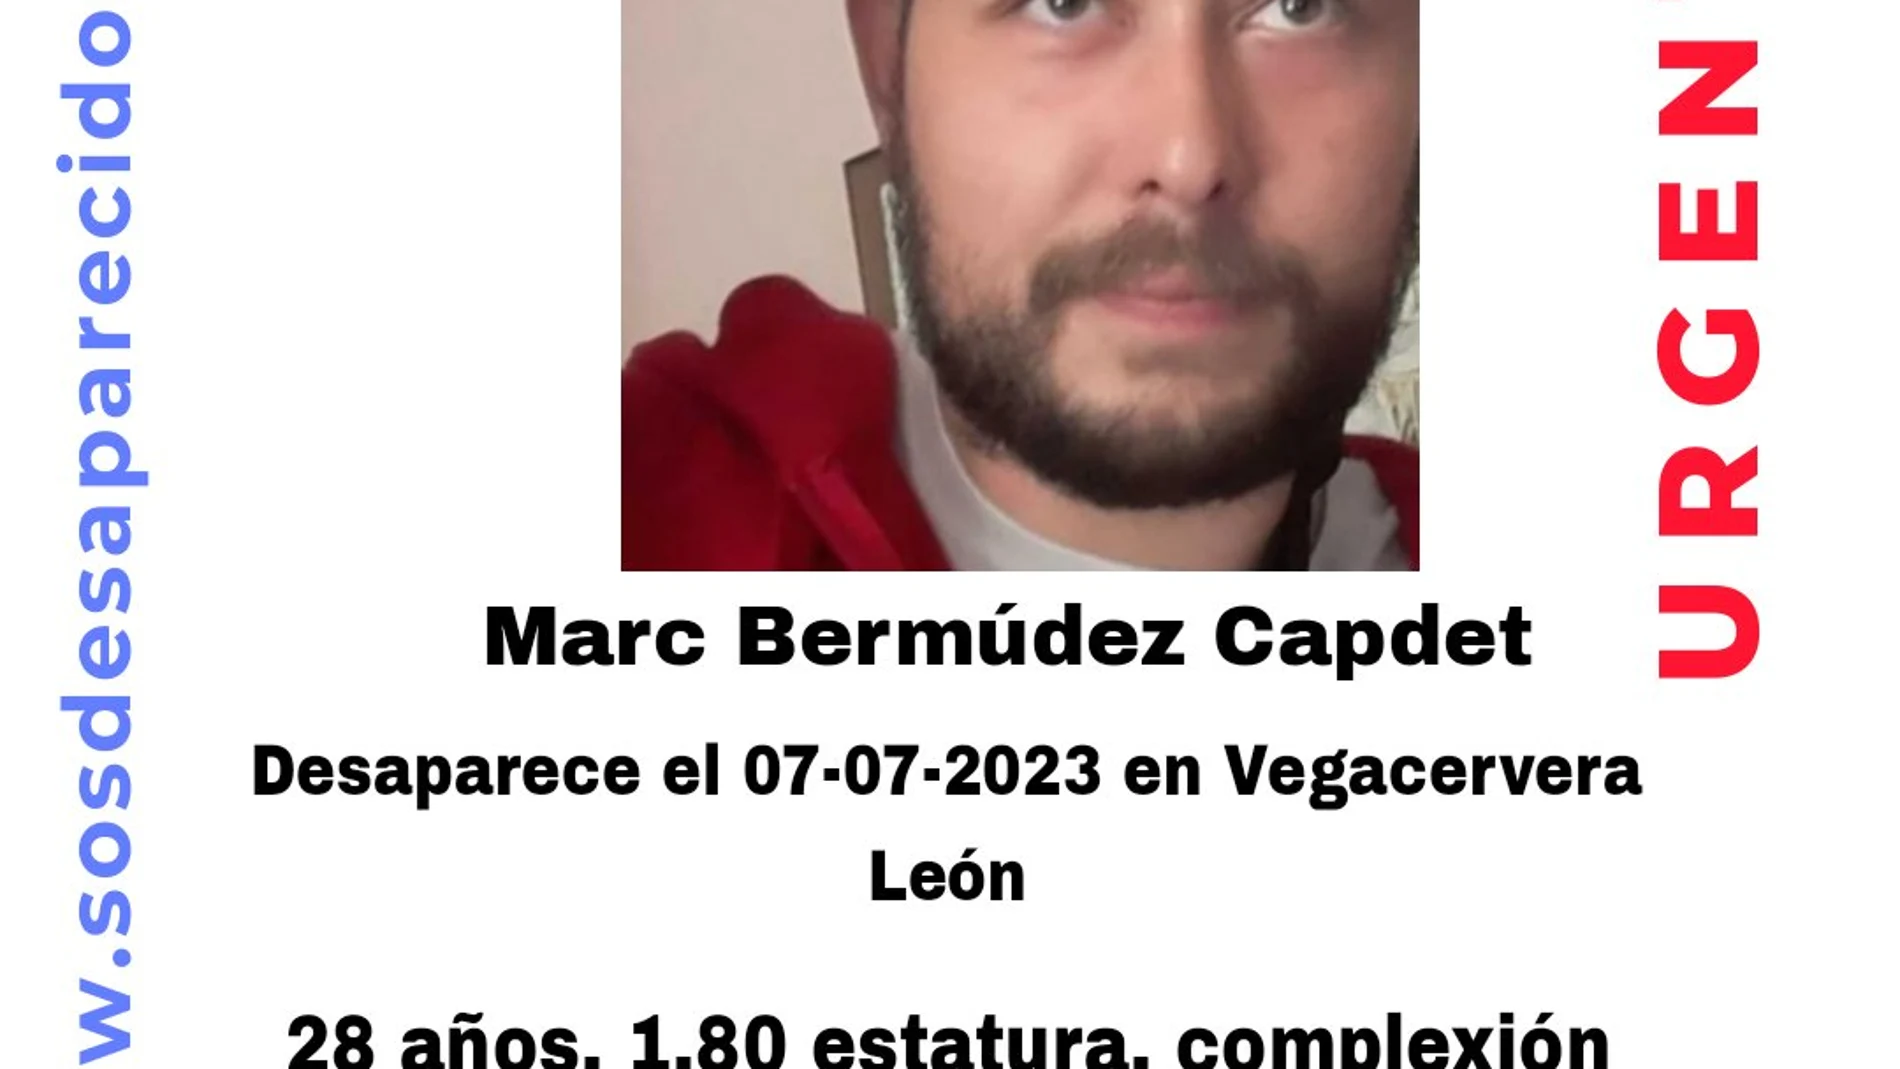 Imagen de Marc Bermúdez Capdet en el cartel de Alerta Desaparecidos